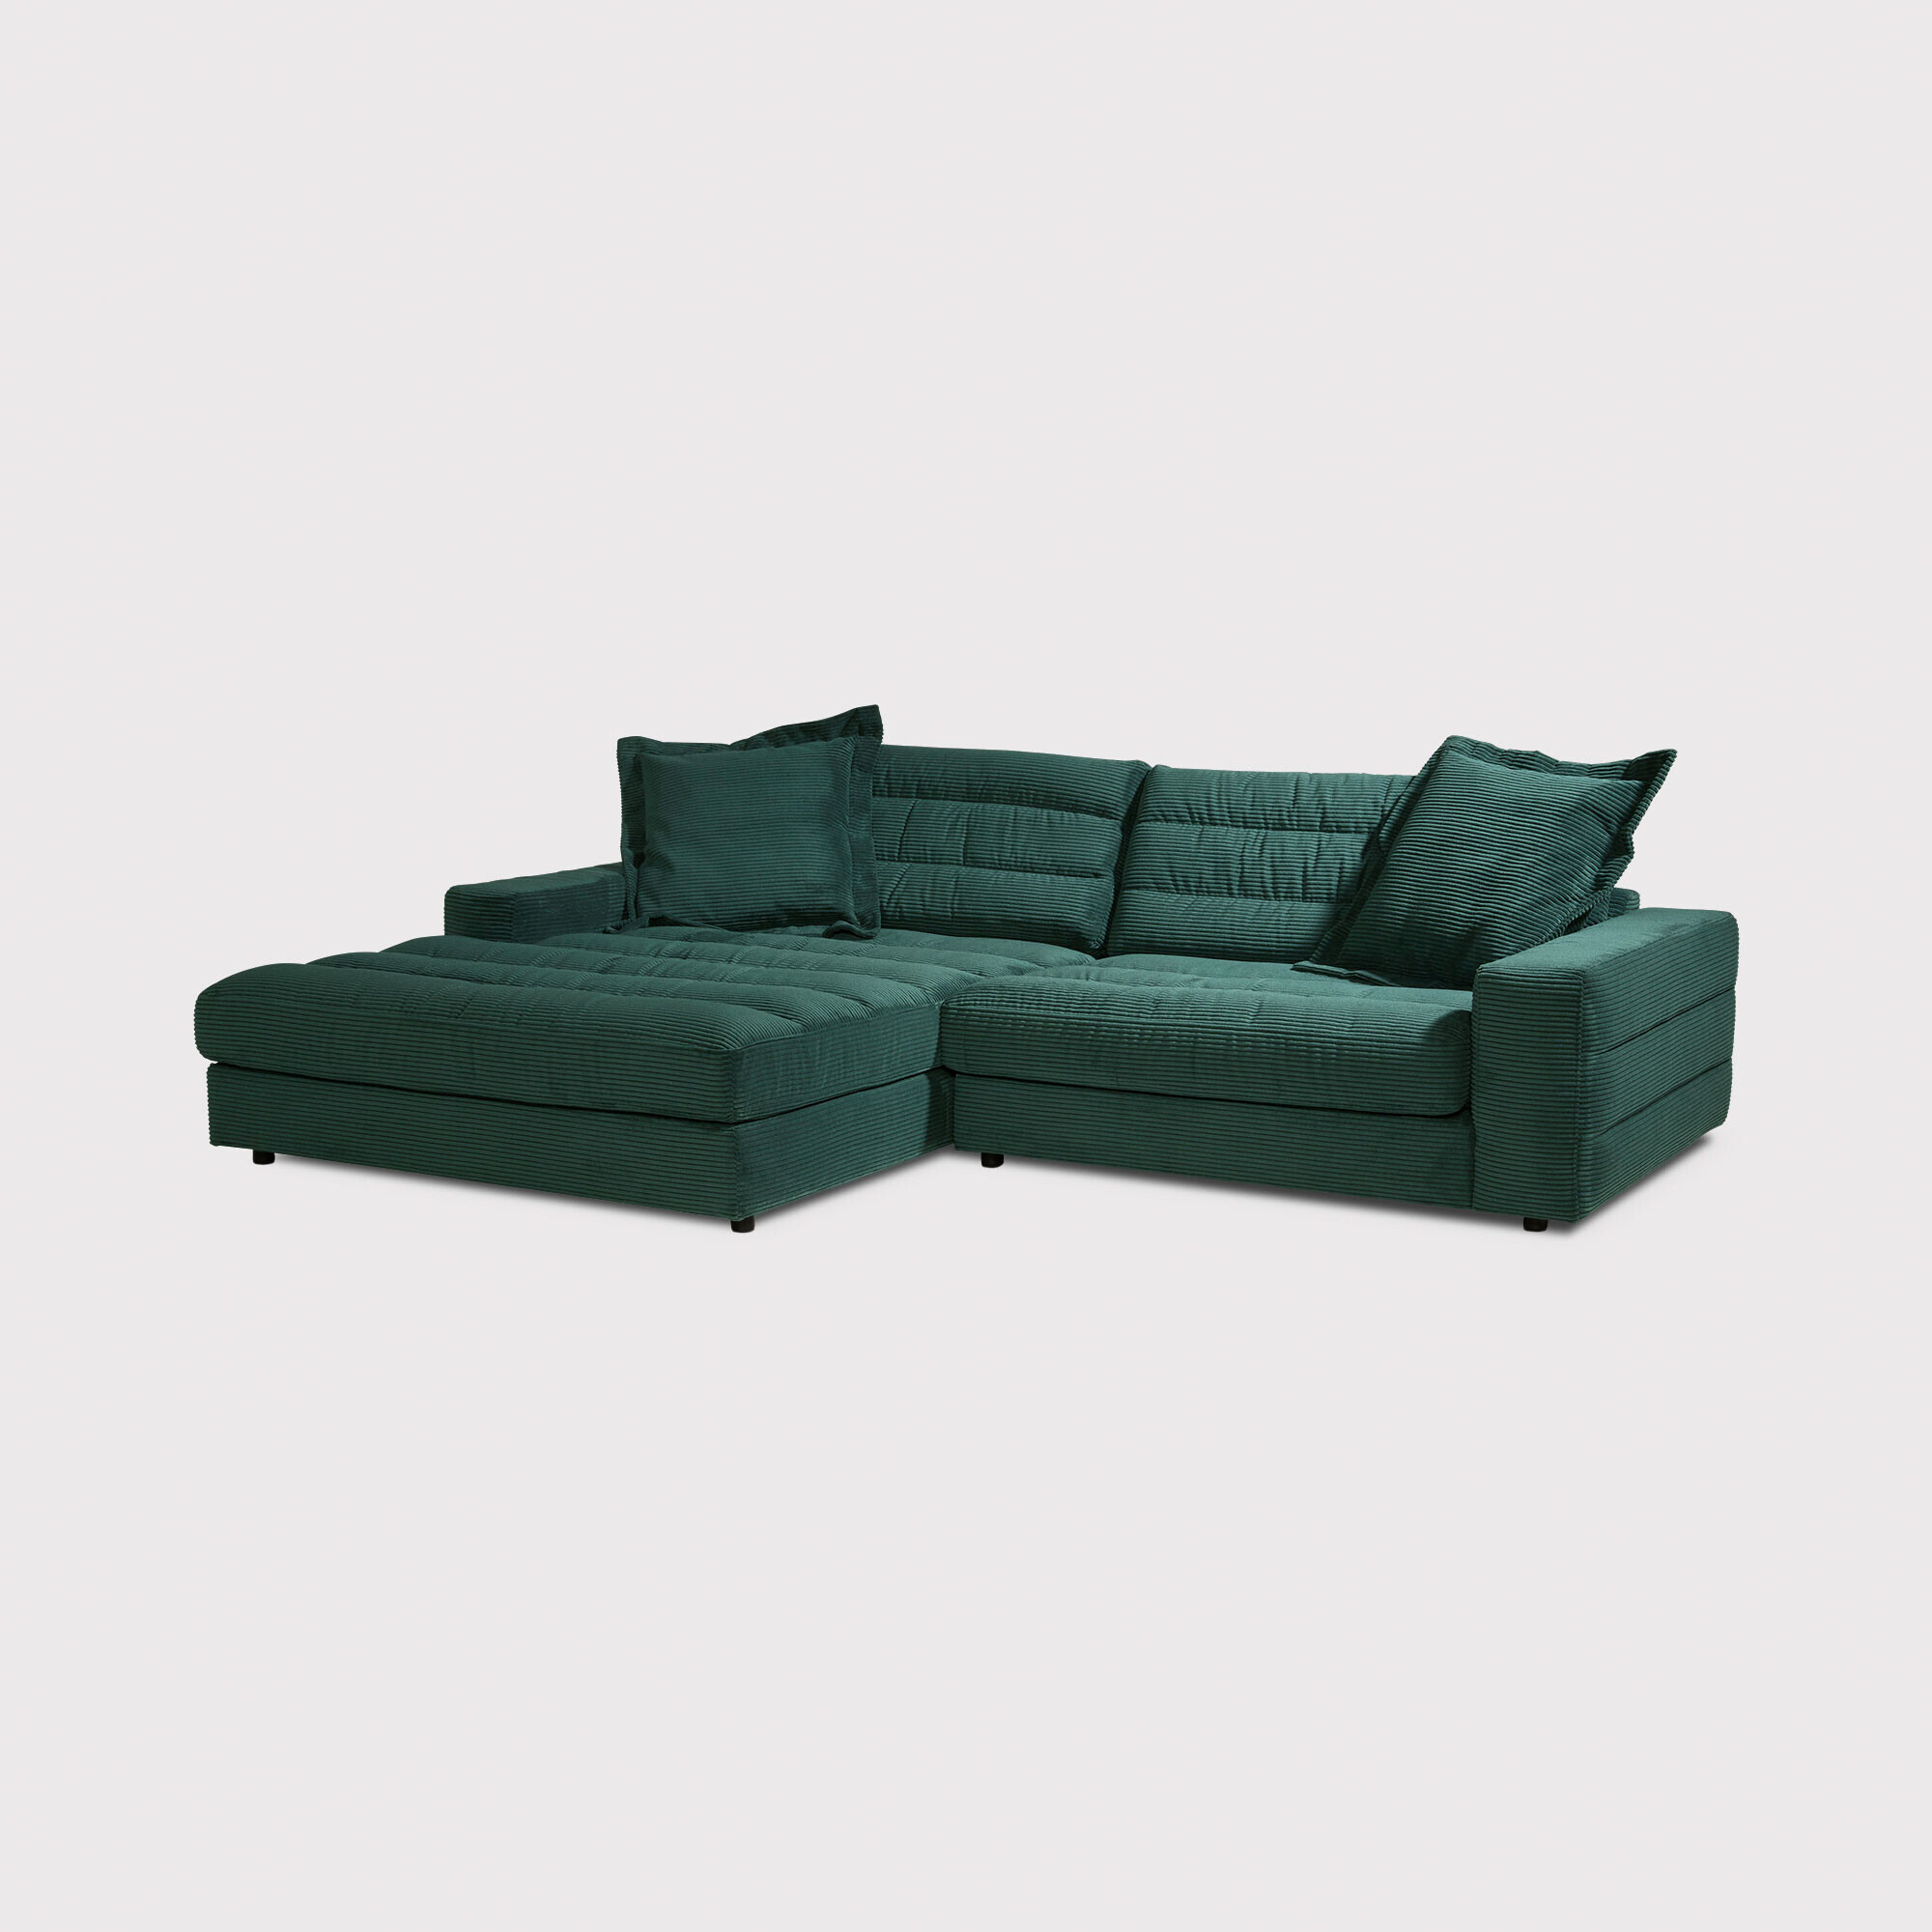 Twain Chaise Sofa Left, Green Fabric - Barker & Stonehouse - image 1